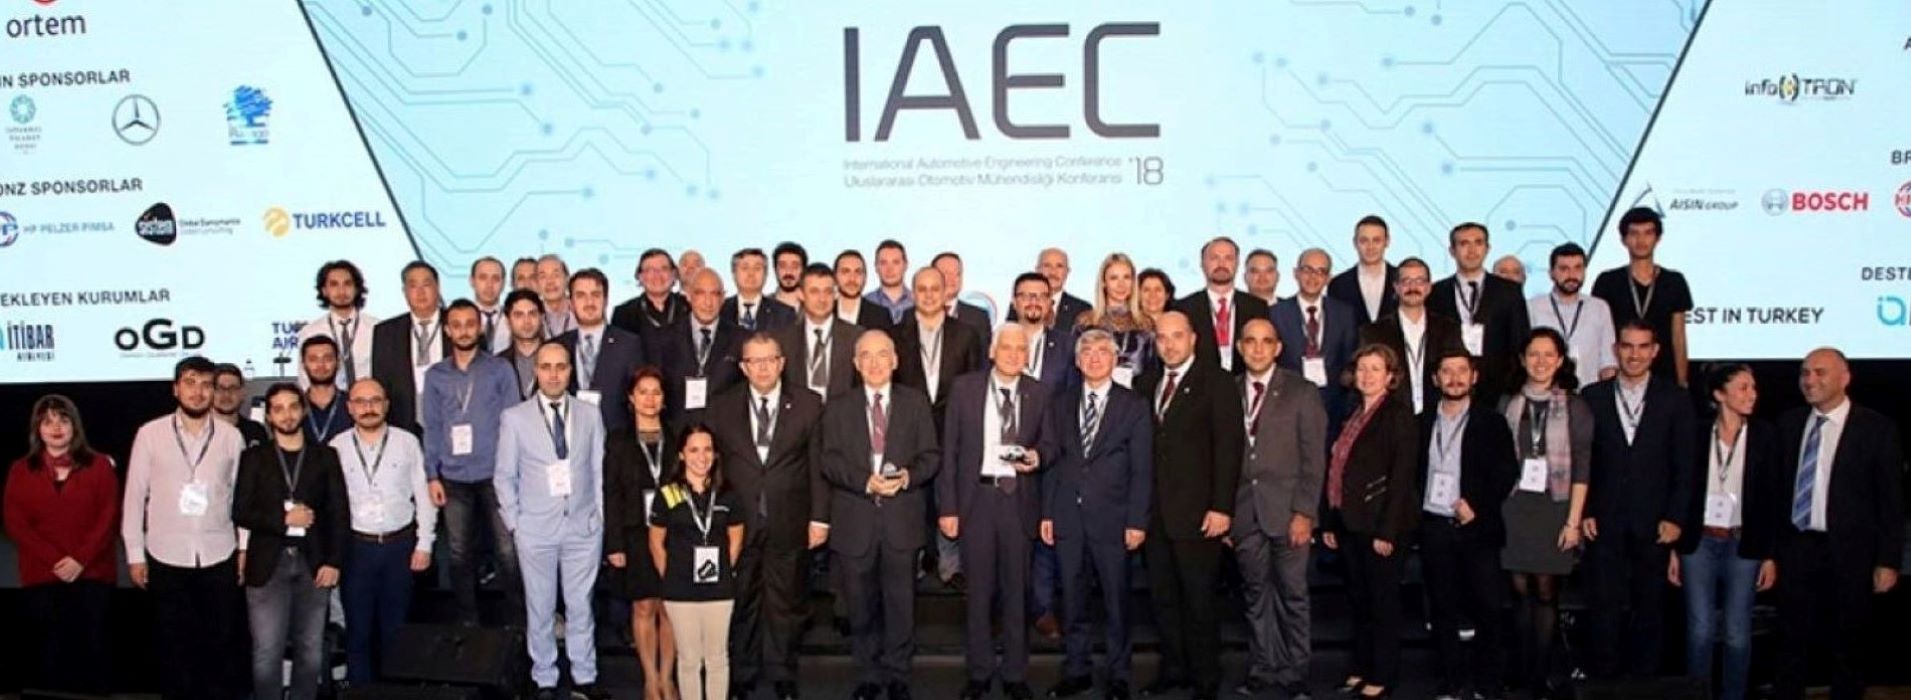 IAEC'18 International Automotive Engineering Conference (Istanbul, 1-2 November 2018)